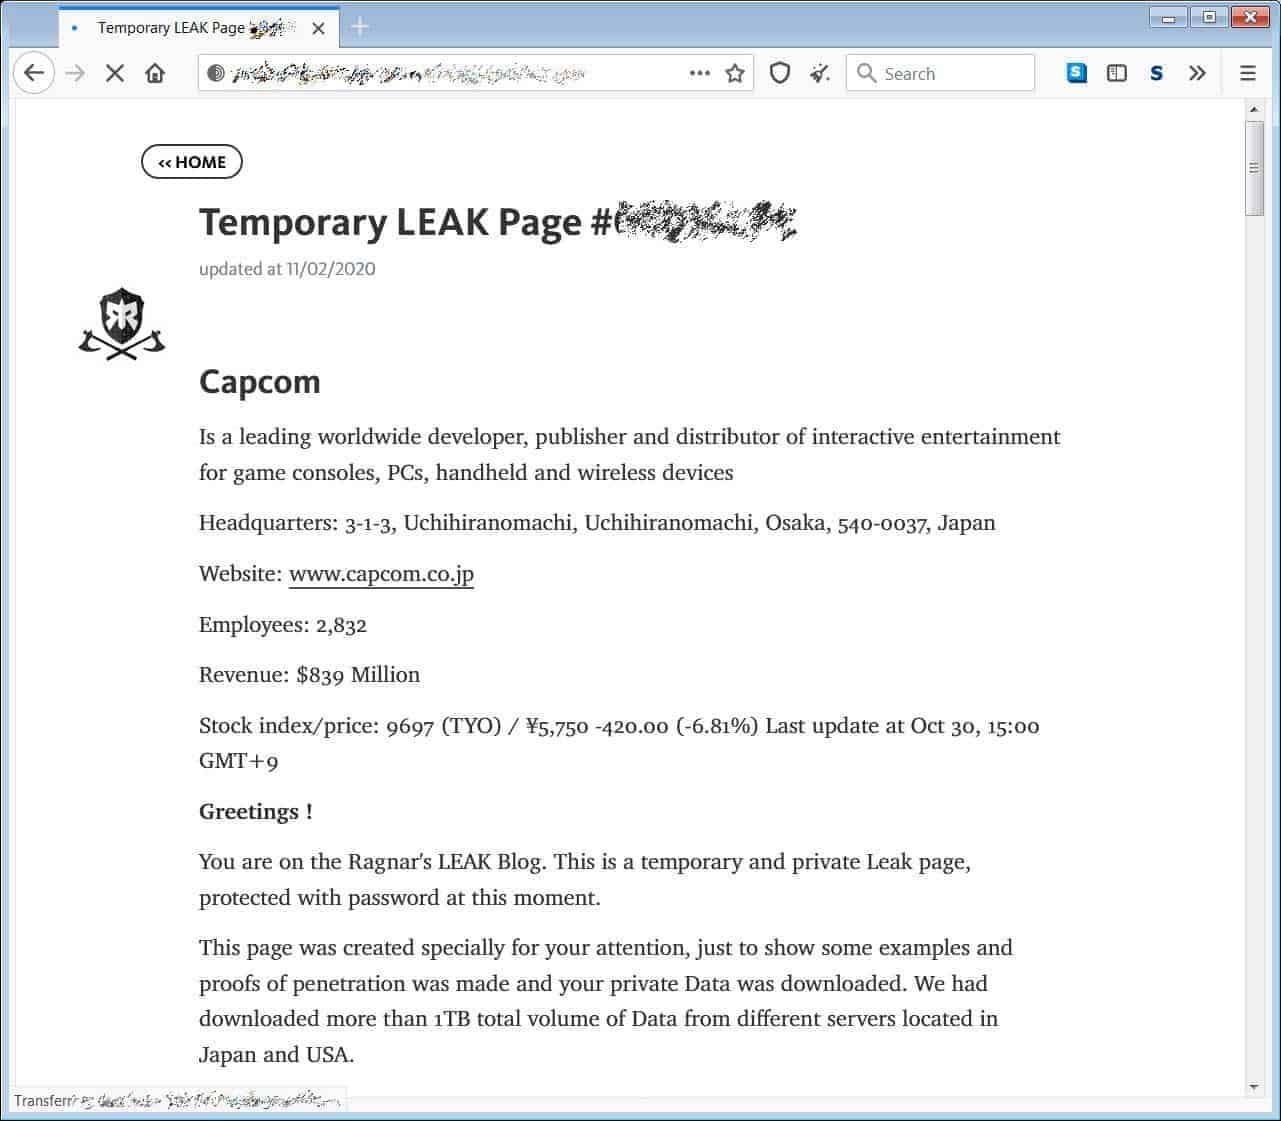 Capcom temporary data leak page